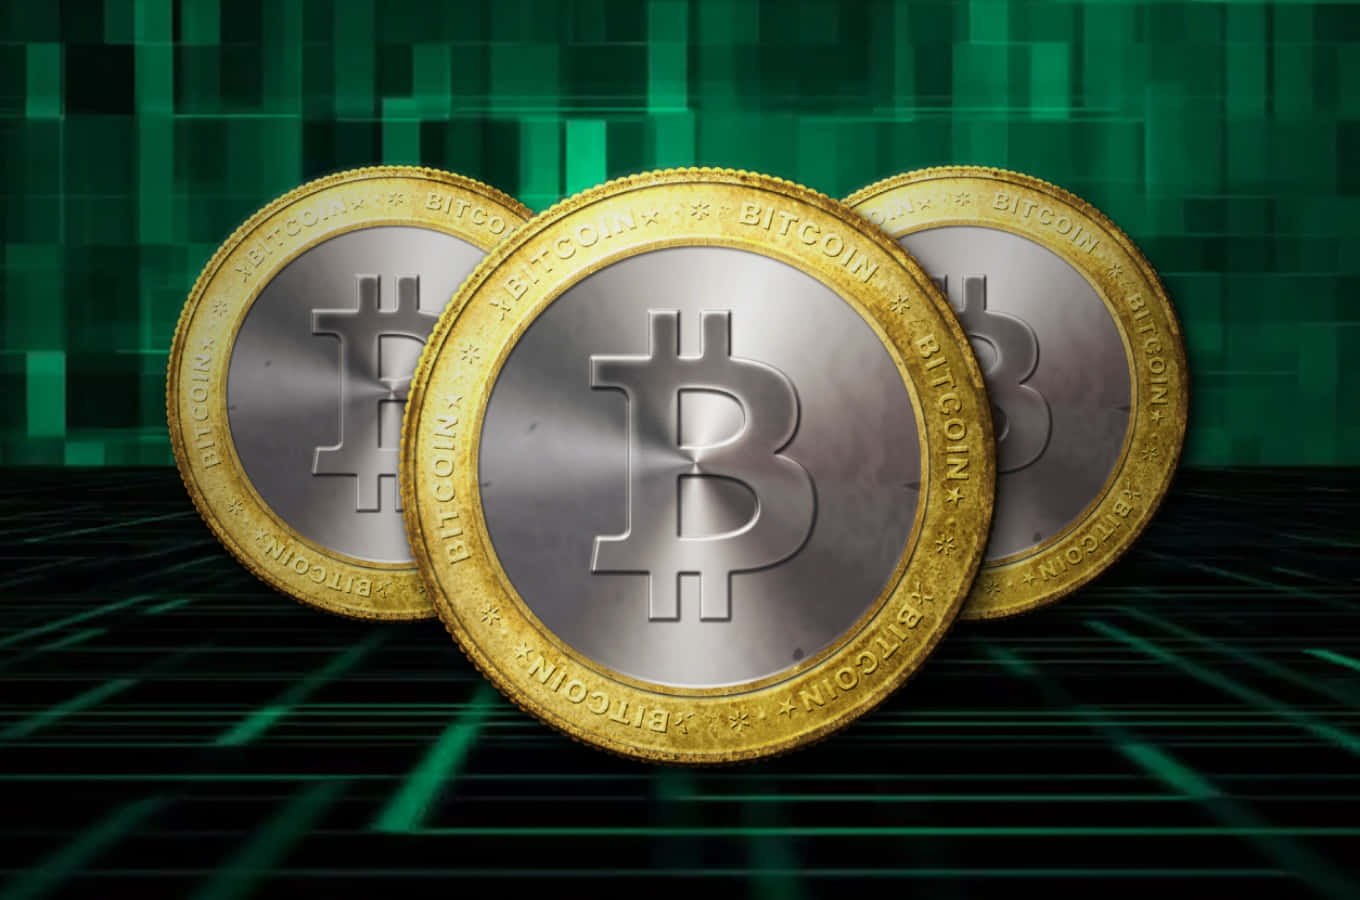 Elfuturo De Las Finanzas Está Asegurado Con Bitcoin